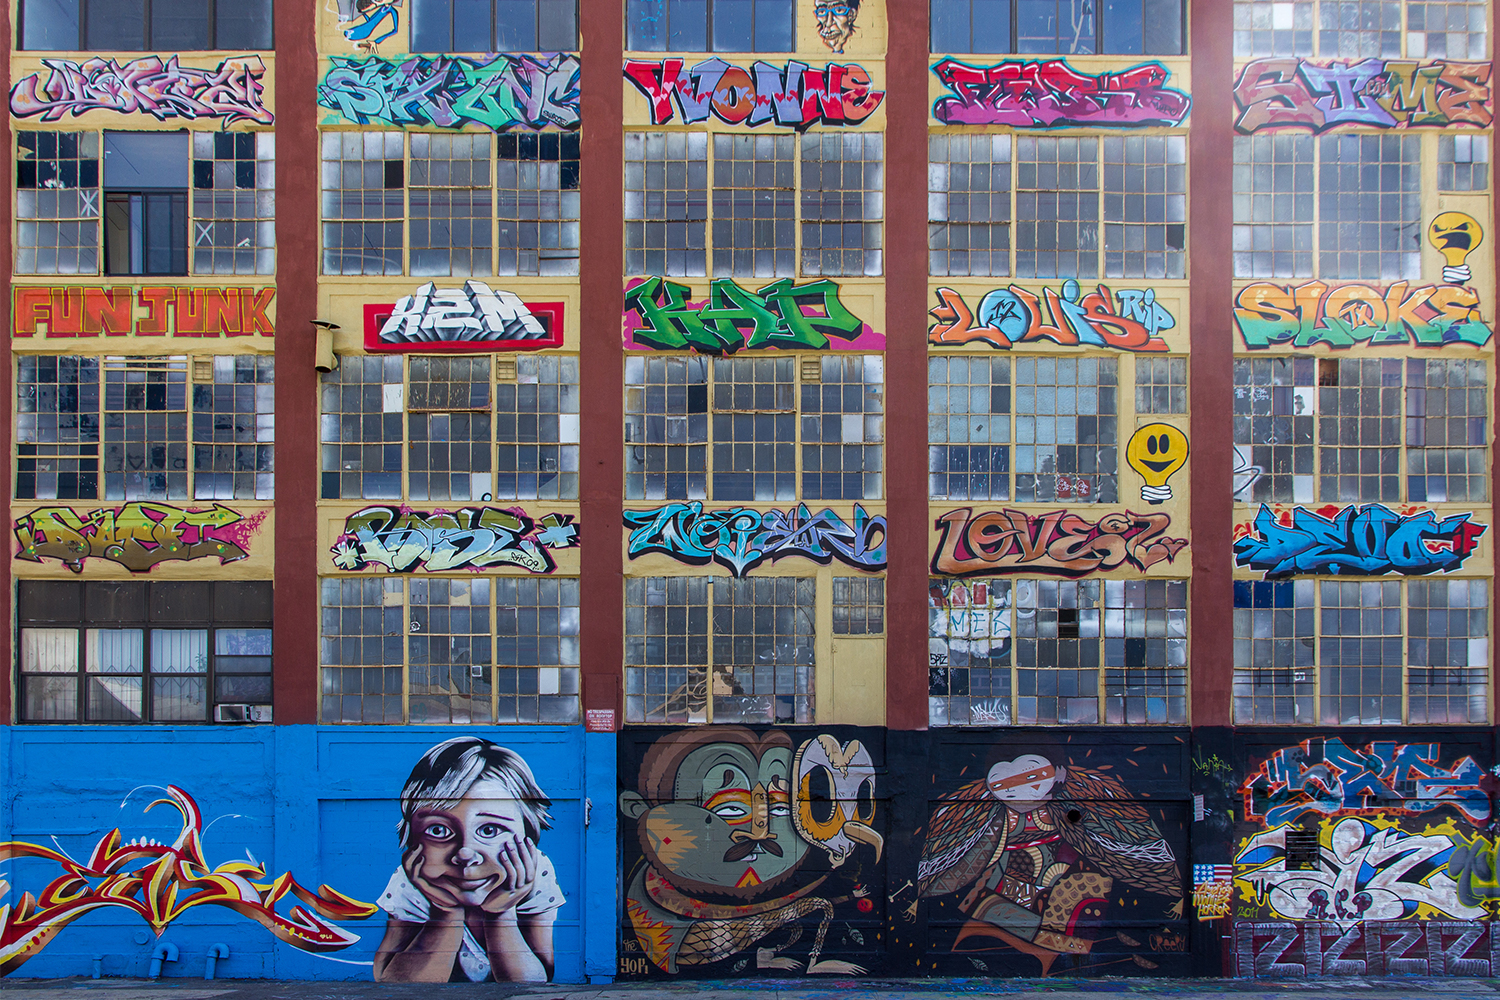 5Pointz New York City mural site in 2011